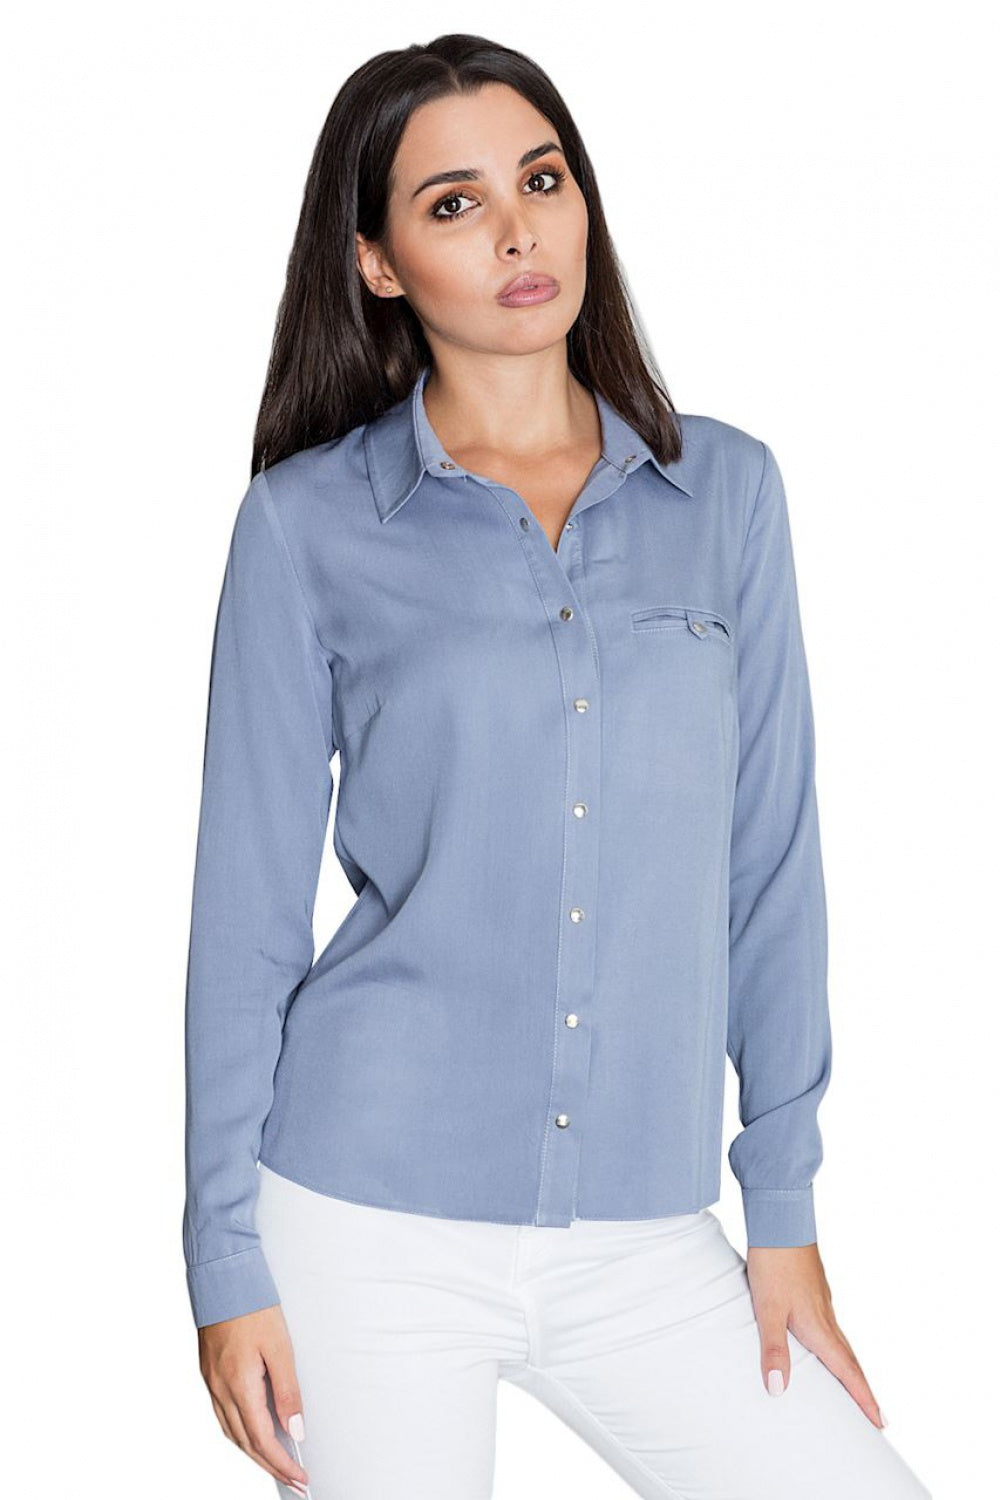 Long sleeve shirt model 111031 Elsy Style Shirts for Women